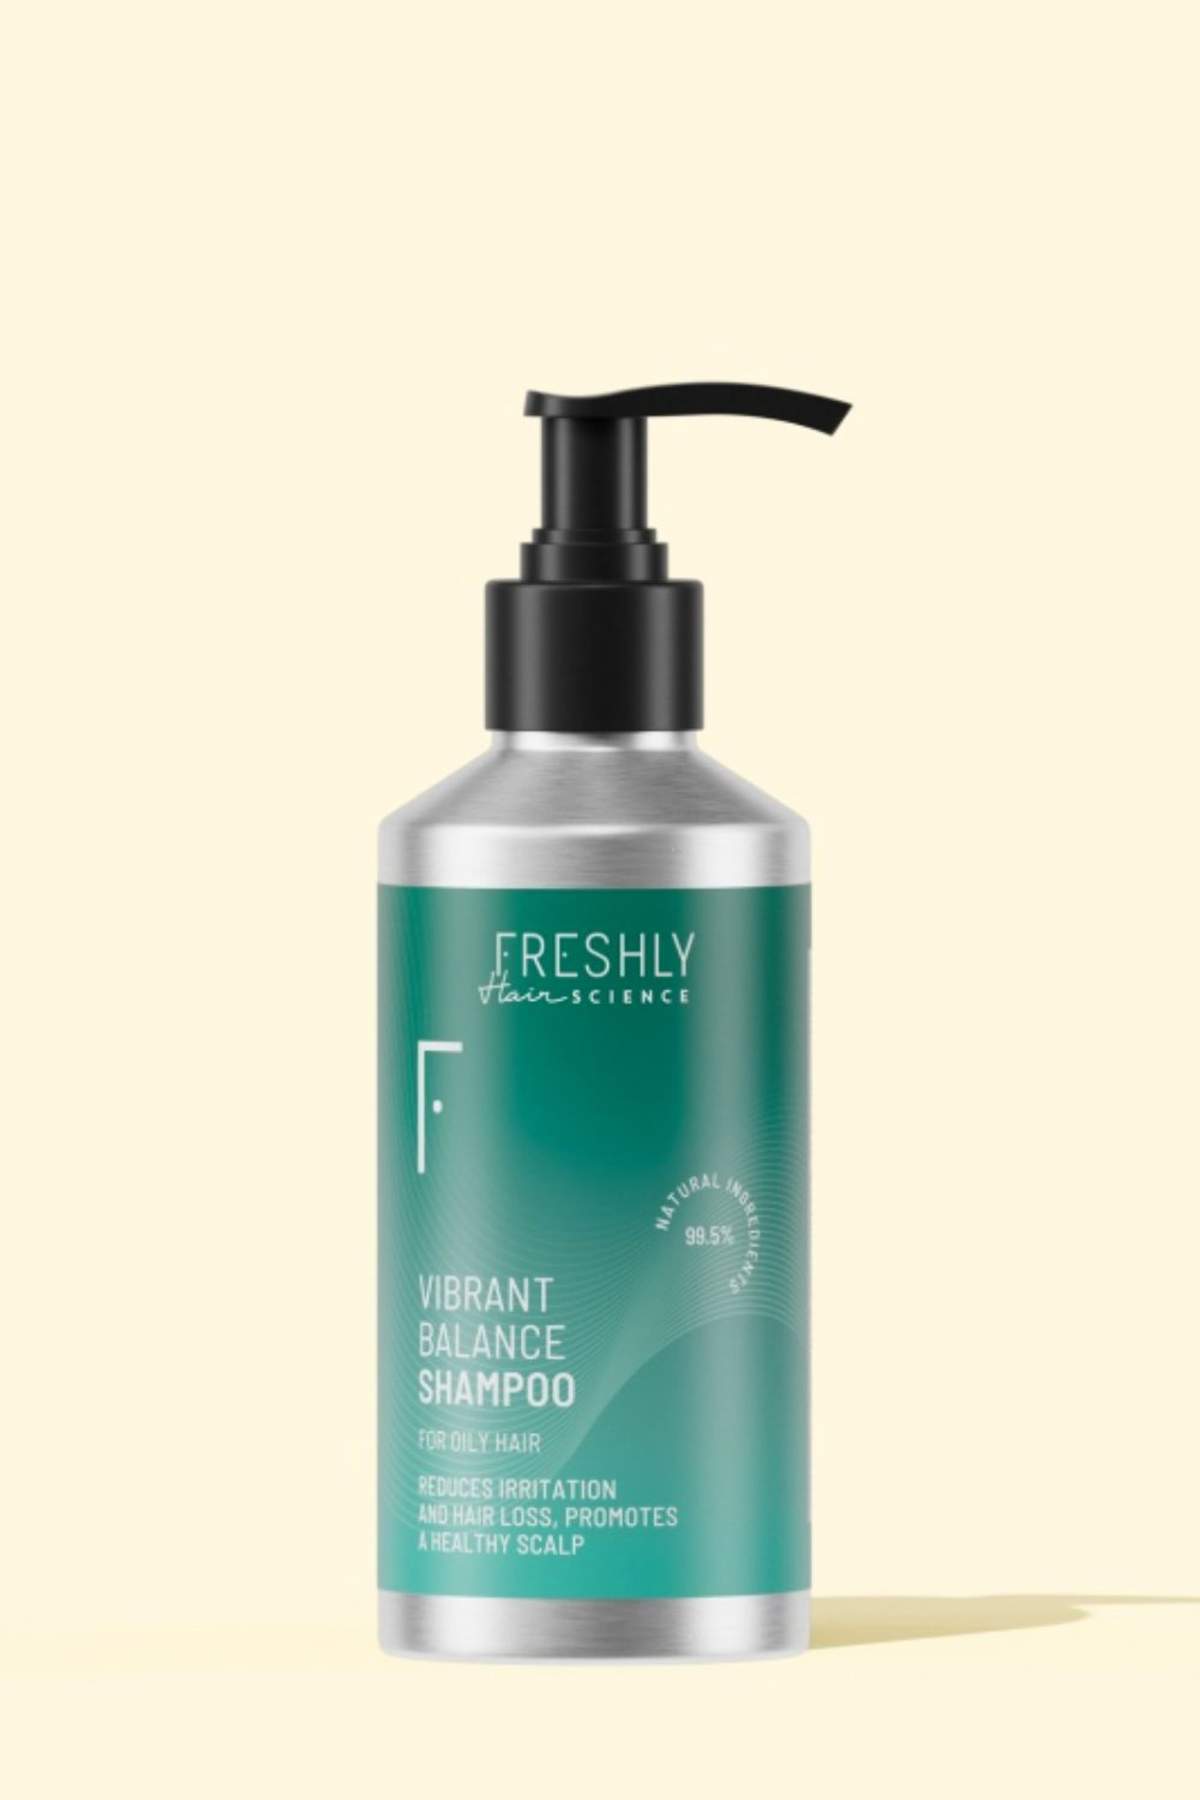 Vibrant Balance Shampoo de Freshly Cosmetics